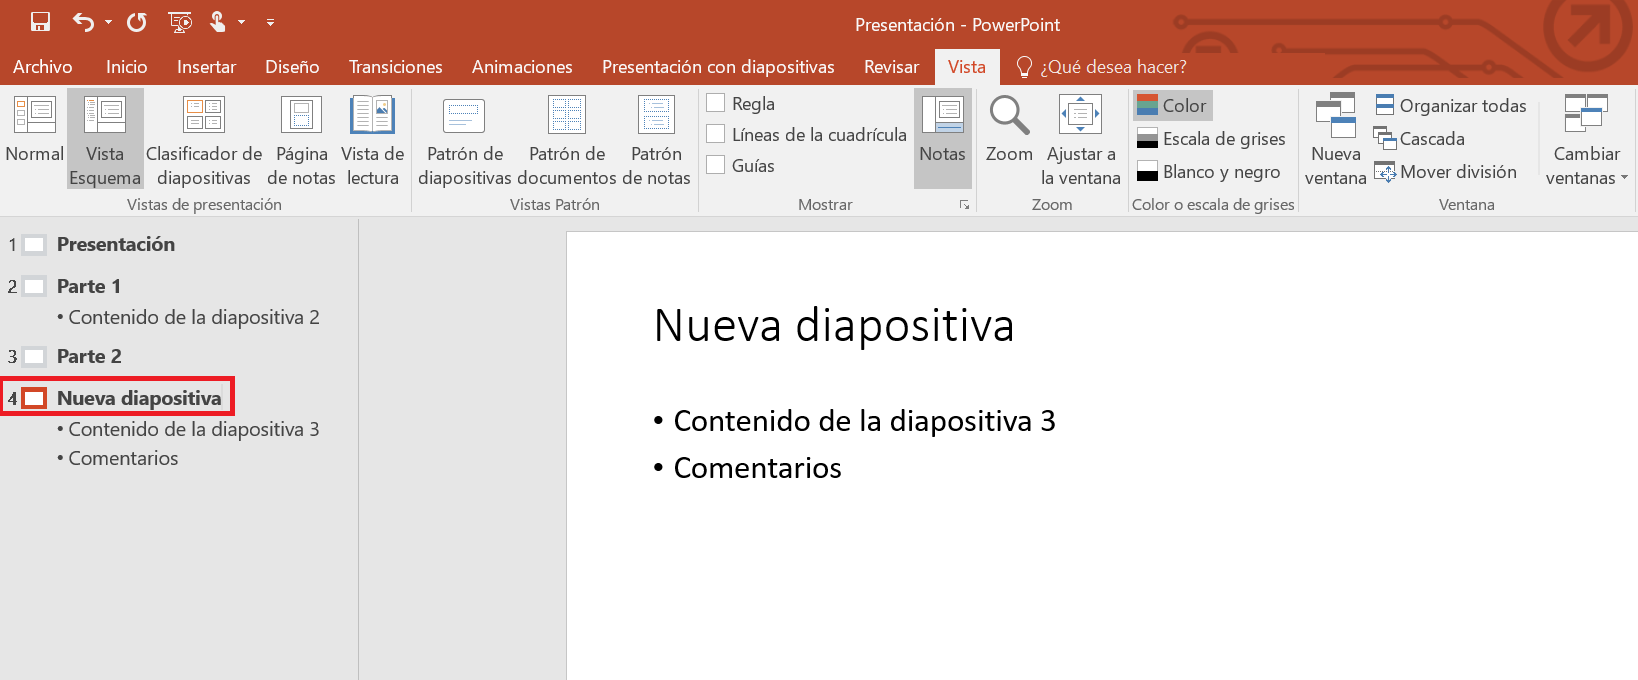 Vista Esquema en PowerPoint: insertar nueva diapositiva